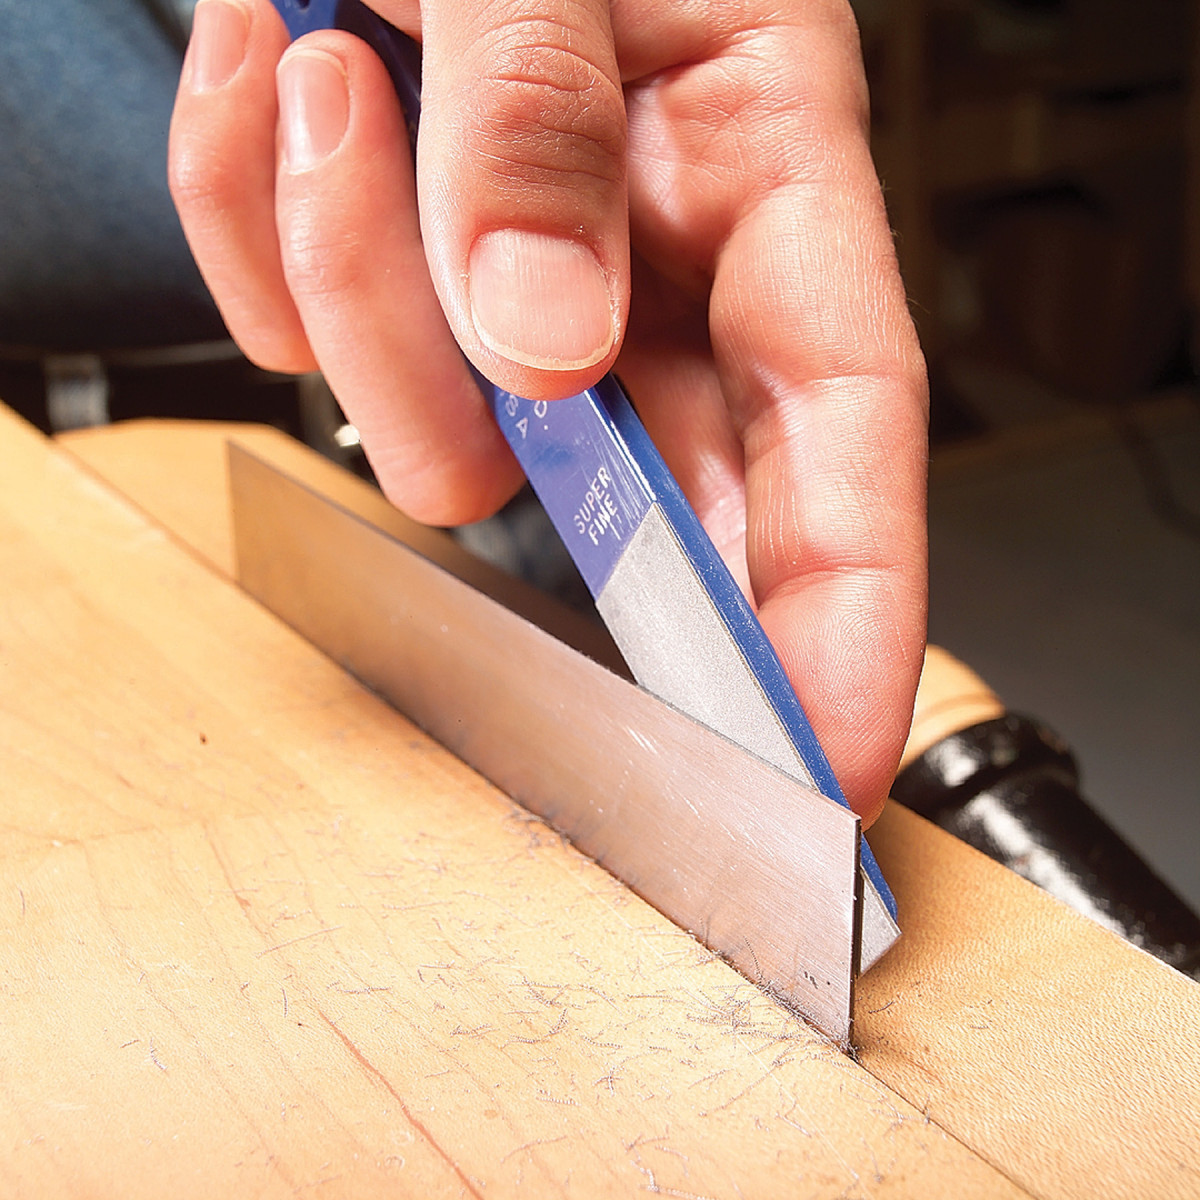 Sandpaper Sharpening Jig - Sharpening Tools On a Budget 